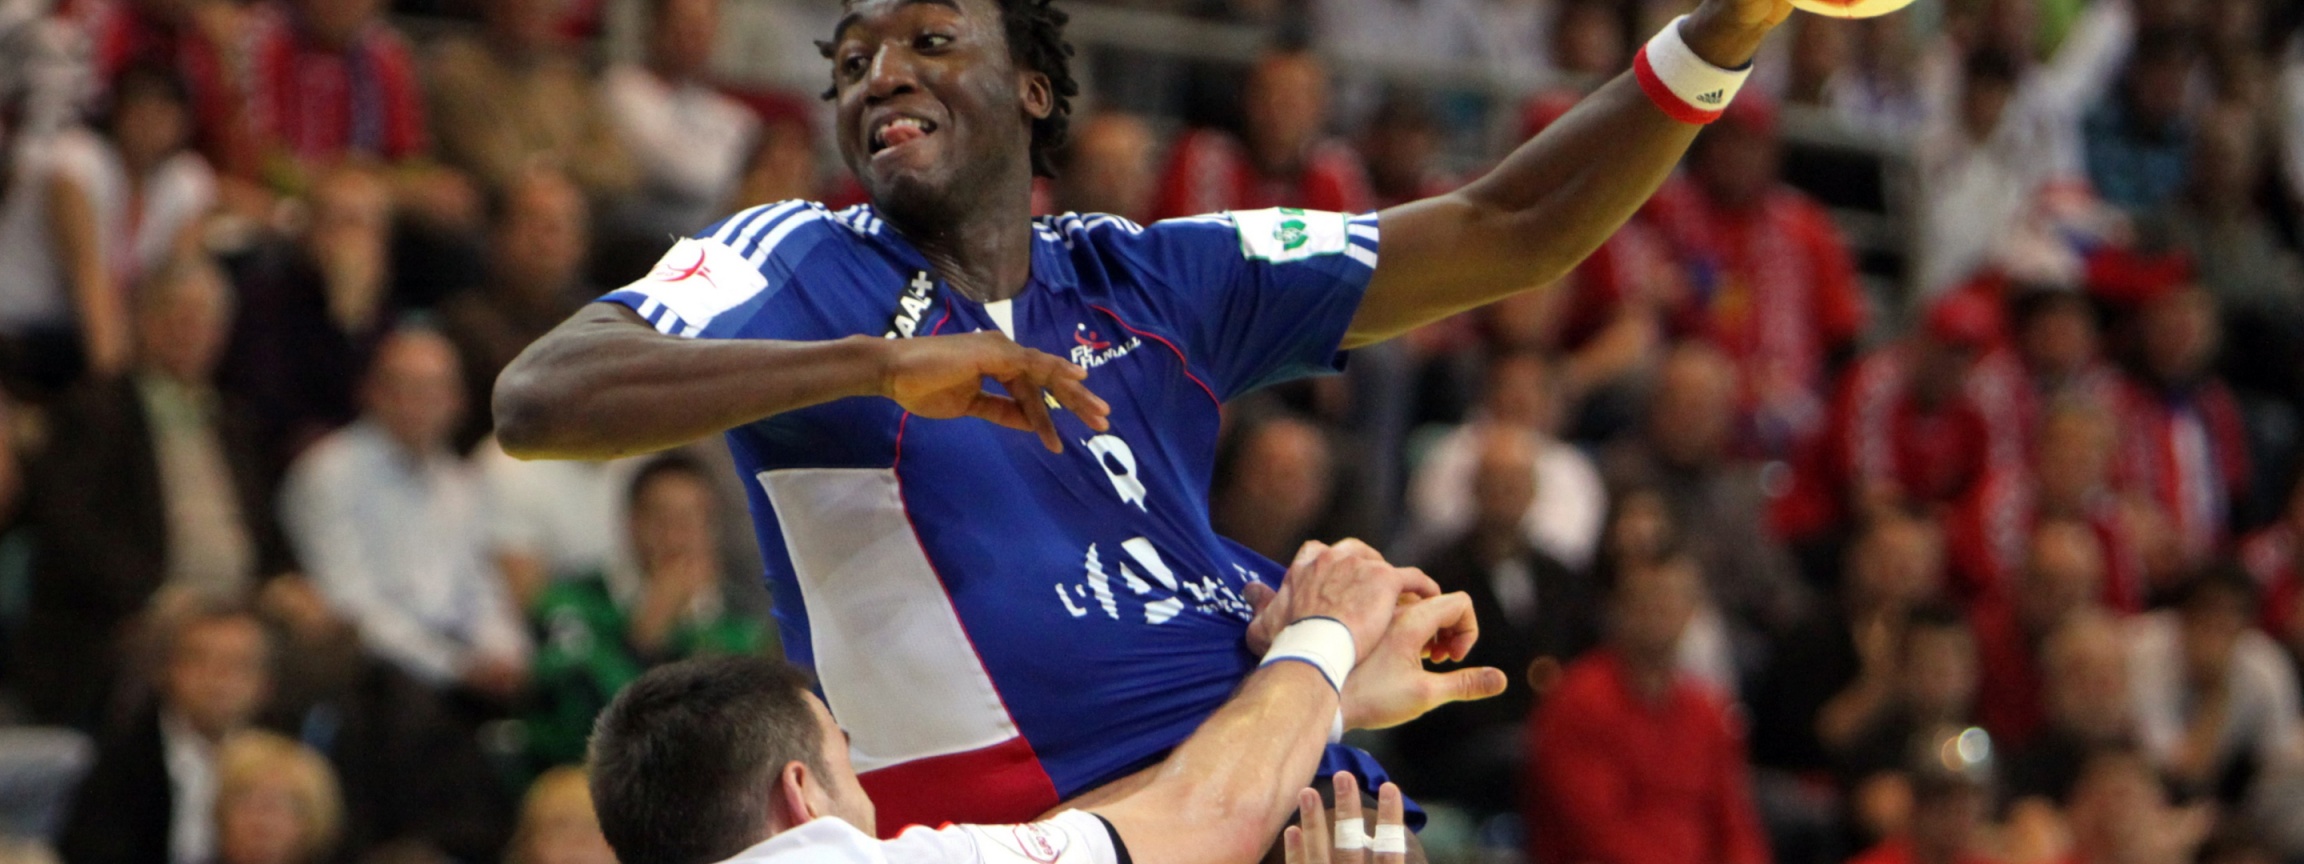 Handball Match - France Vs Hungary